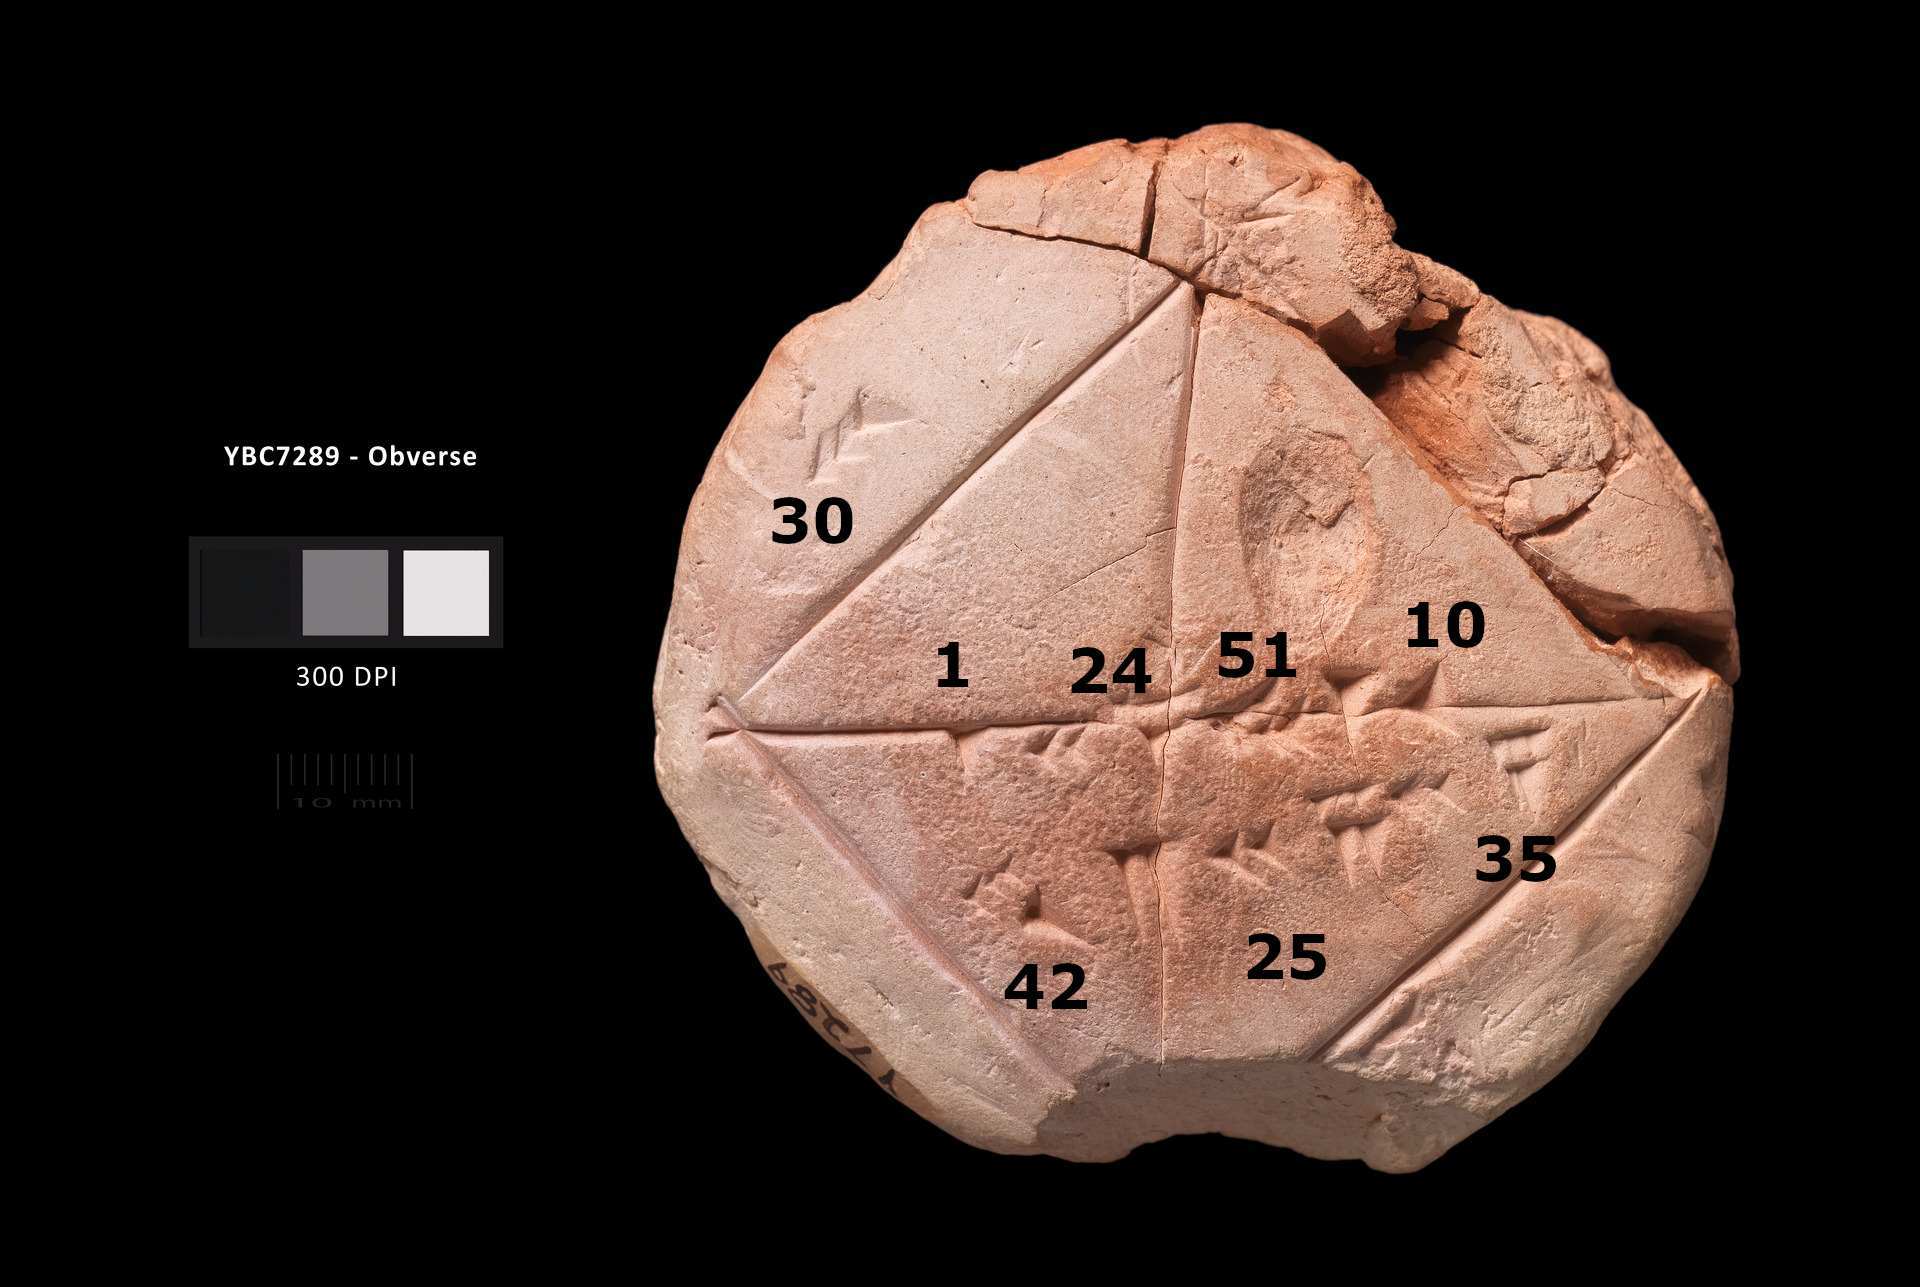 Yale Babylonian Collection의 태블릿 YBC 7289 라벨이 붙은 사진